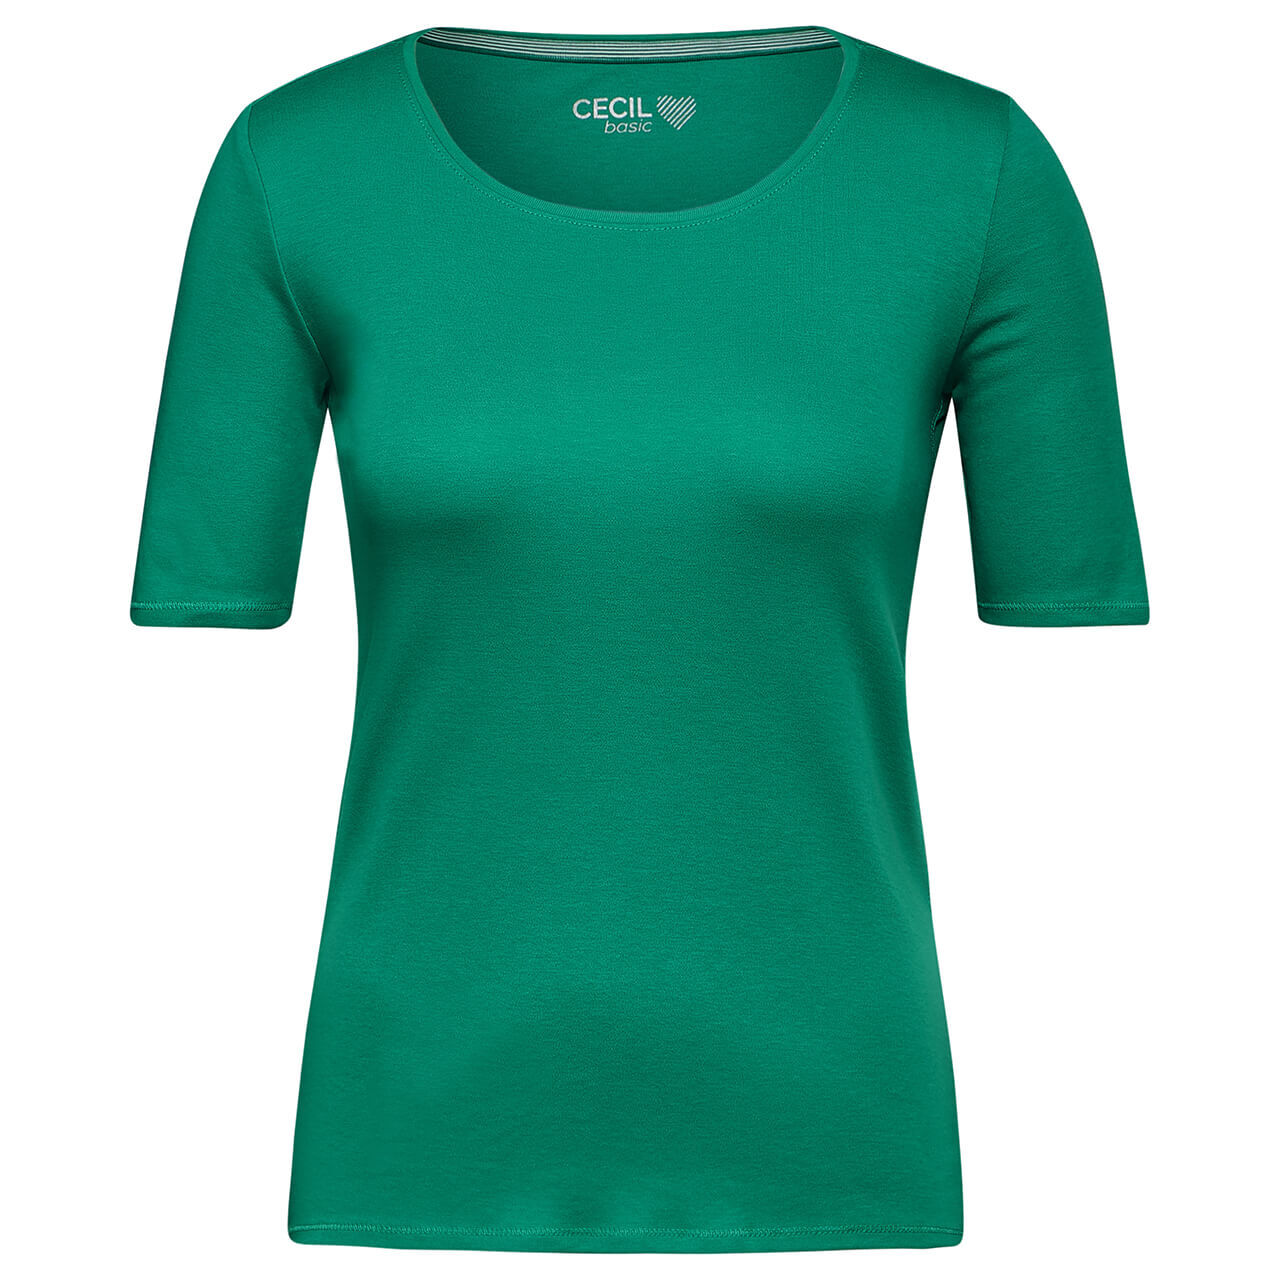 Cecil Damen T-Shirt Lena malachite green